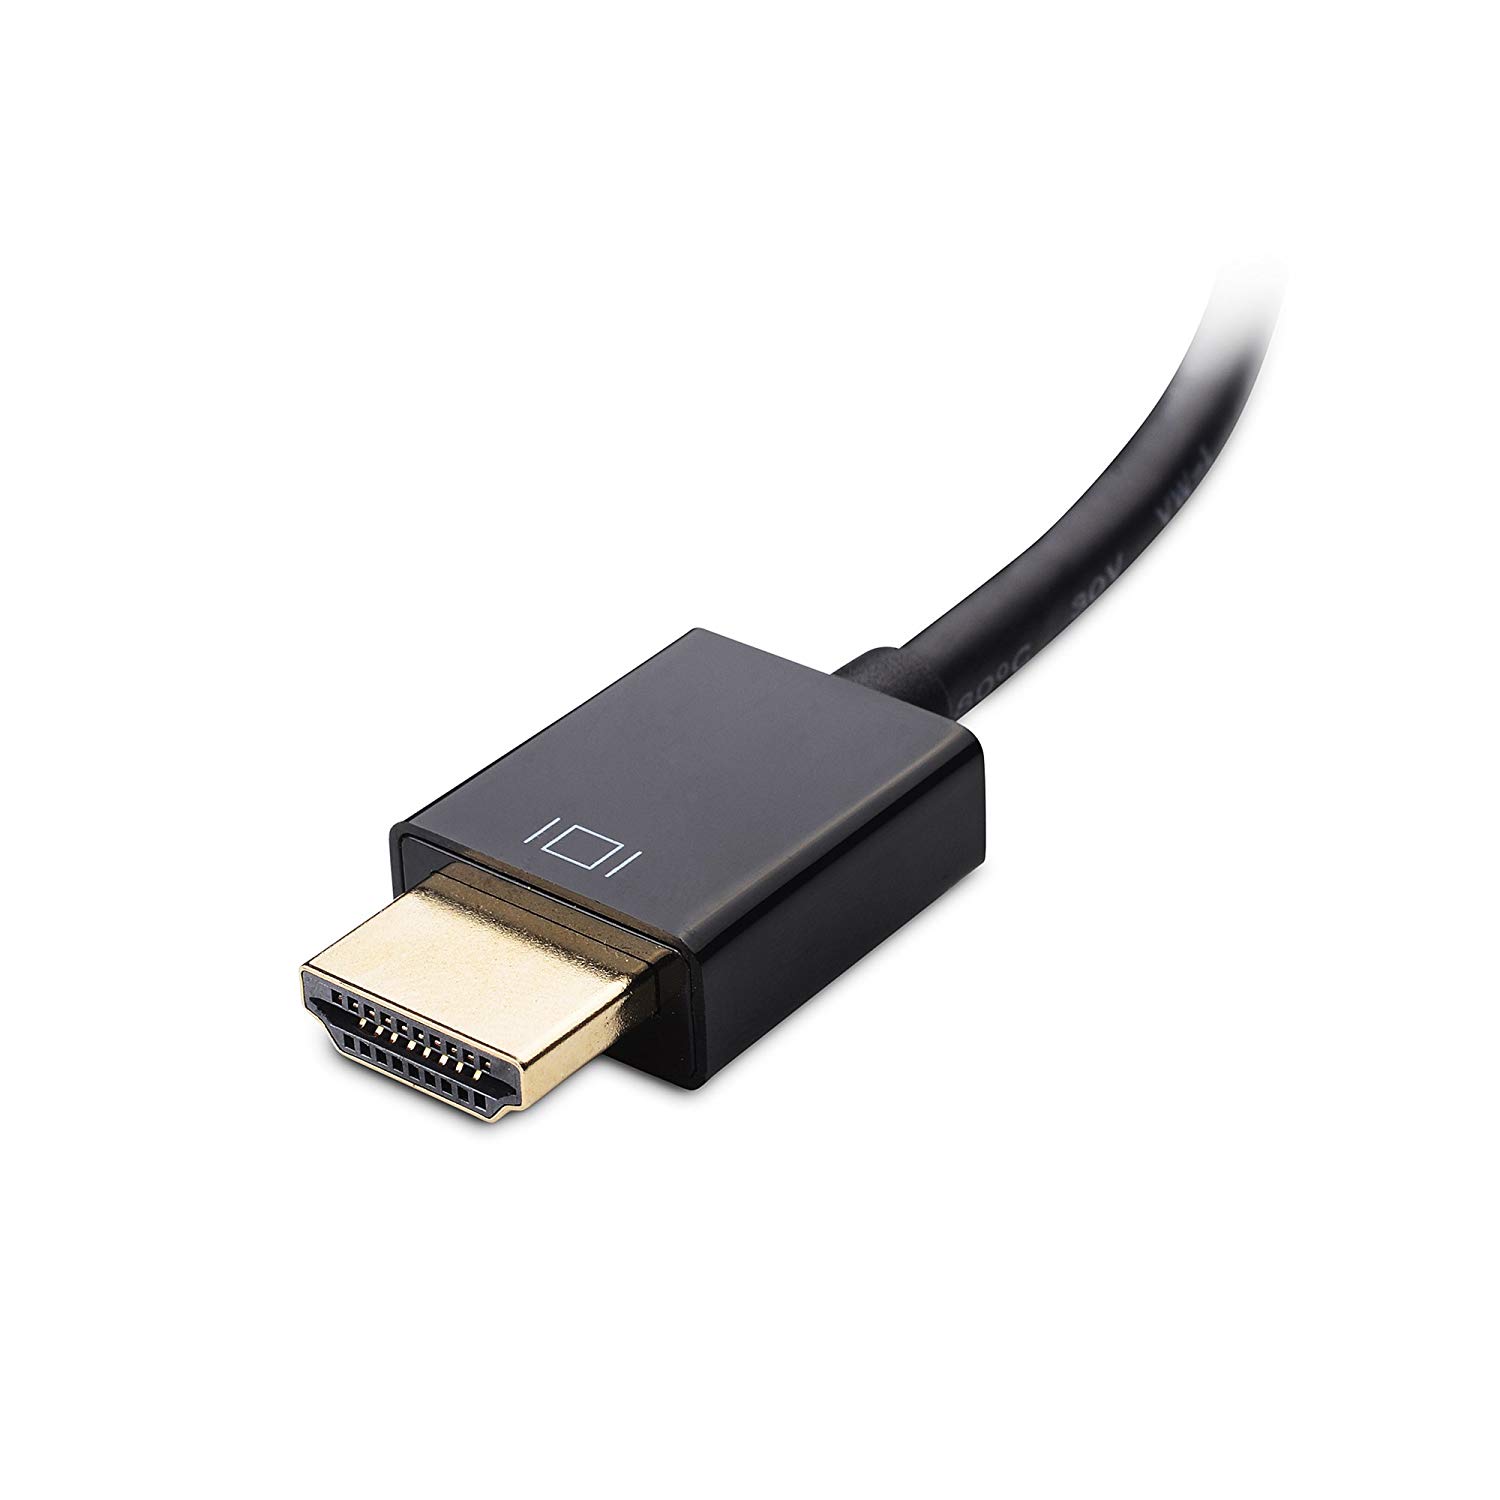 Cable Matters HDMI to VGA Adapter (HDMI to VGA Converter/VGA to HDMI  Adapter) in Black